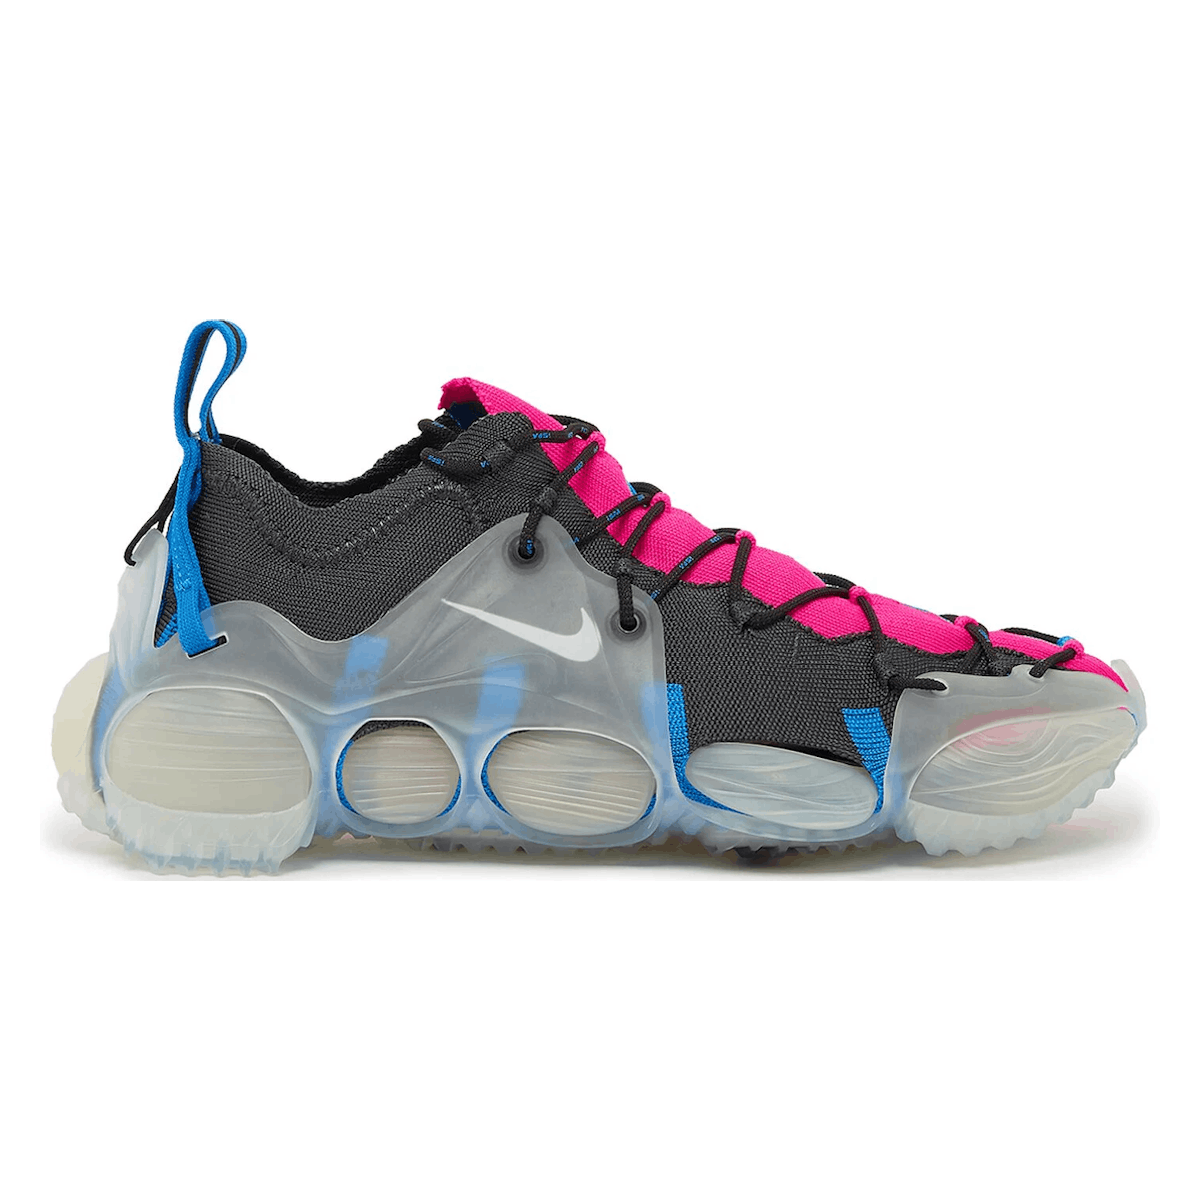 Nike Ispa Link Axis "Fierce Pink / Photo Blue"